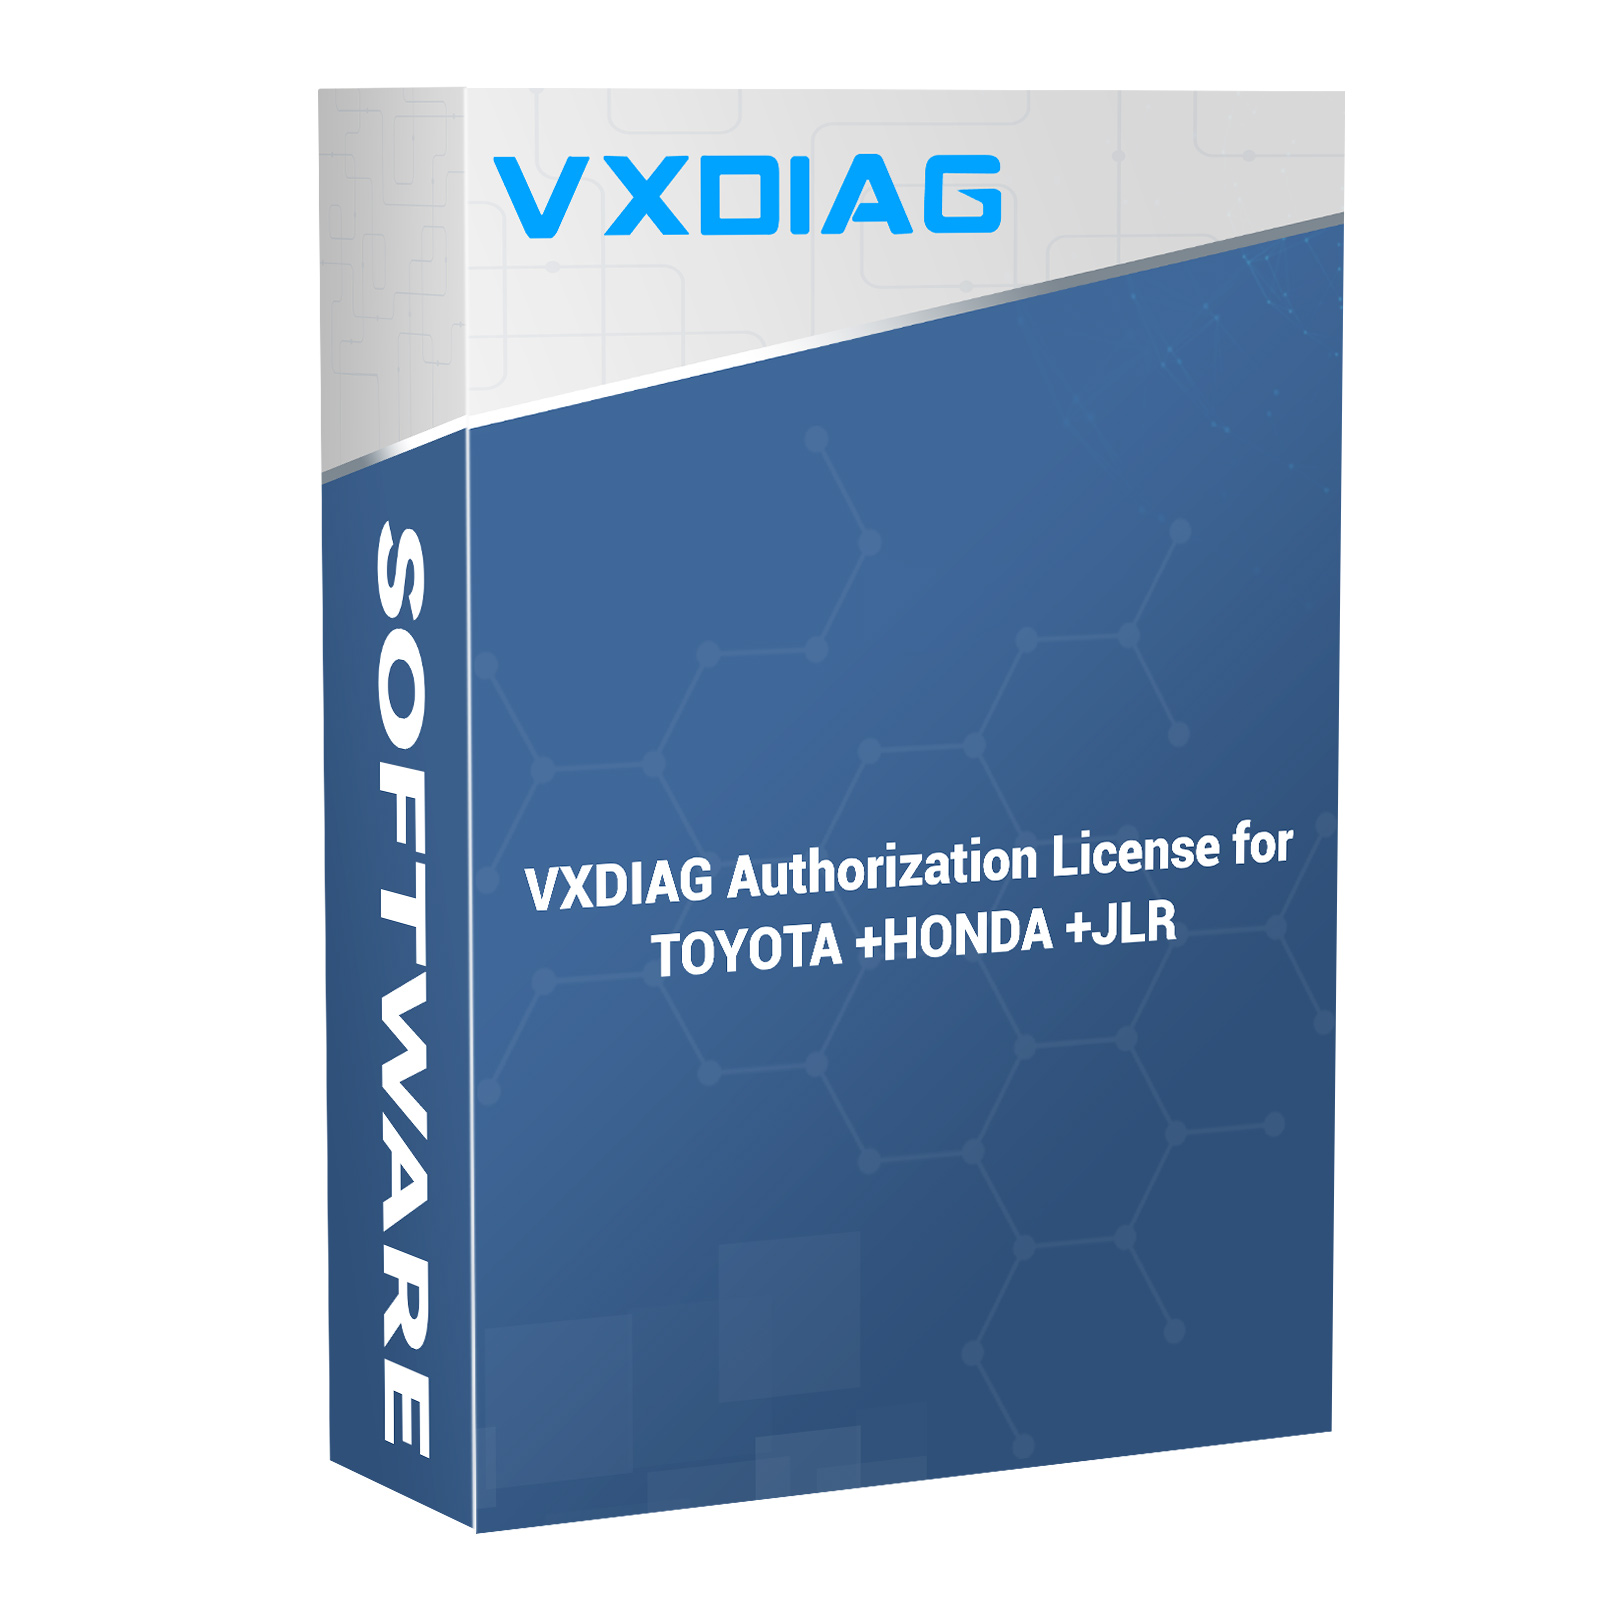 VXDIAG TOYOTA + HONDA + JLR Authorization License Package for VXDIAG Multi Series/ VCX SE Series